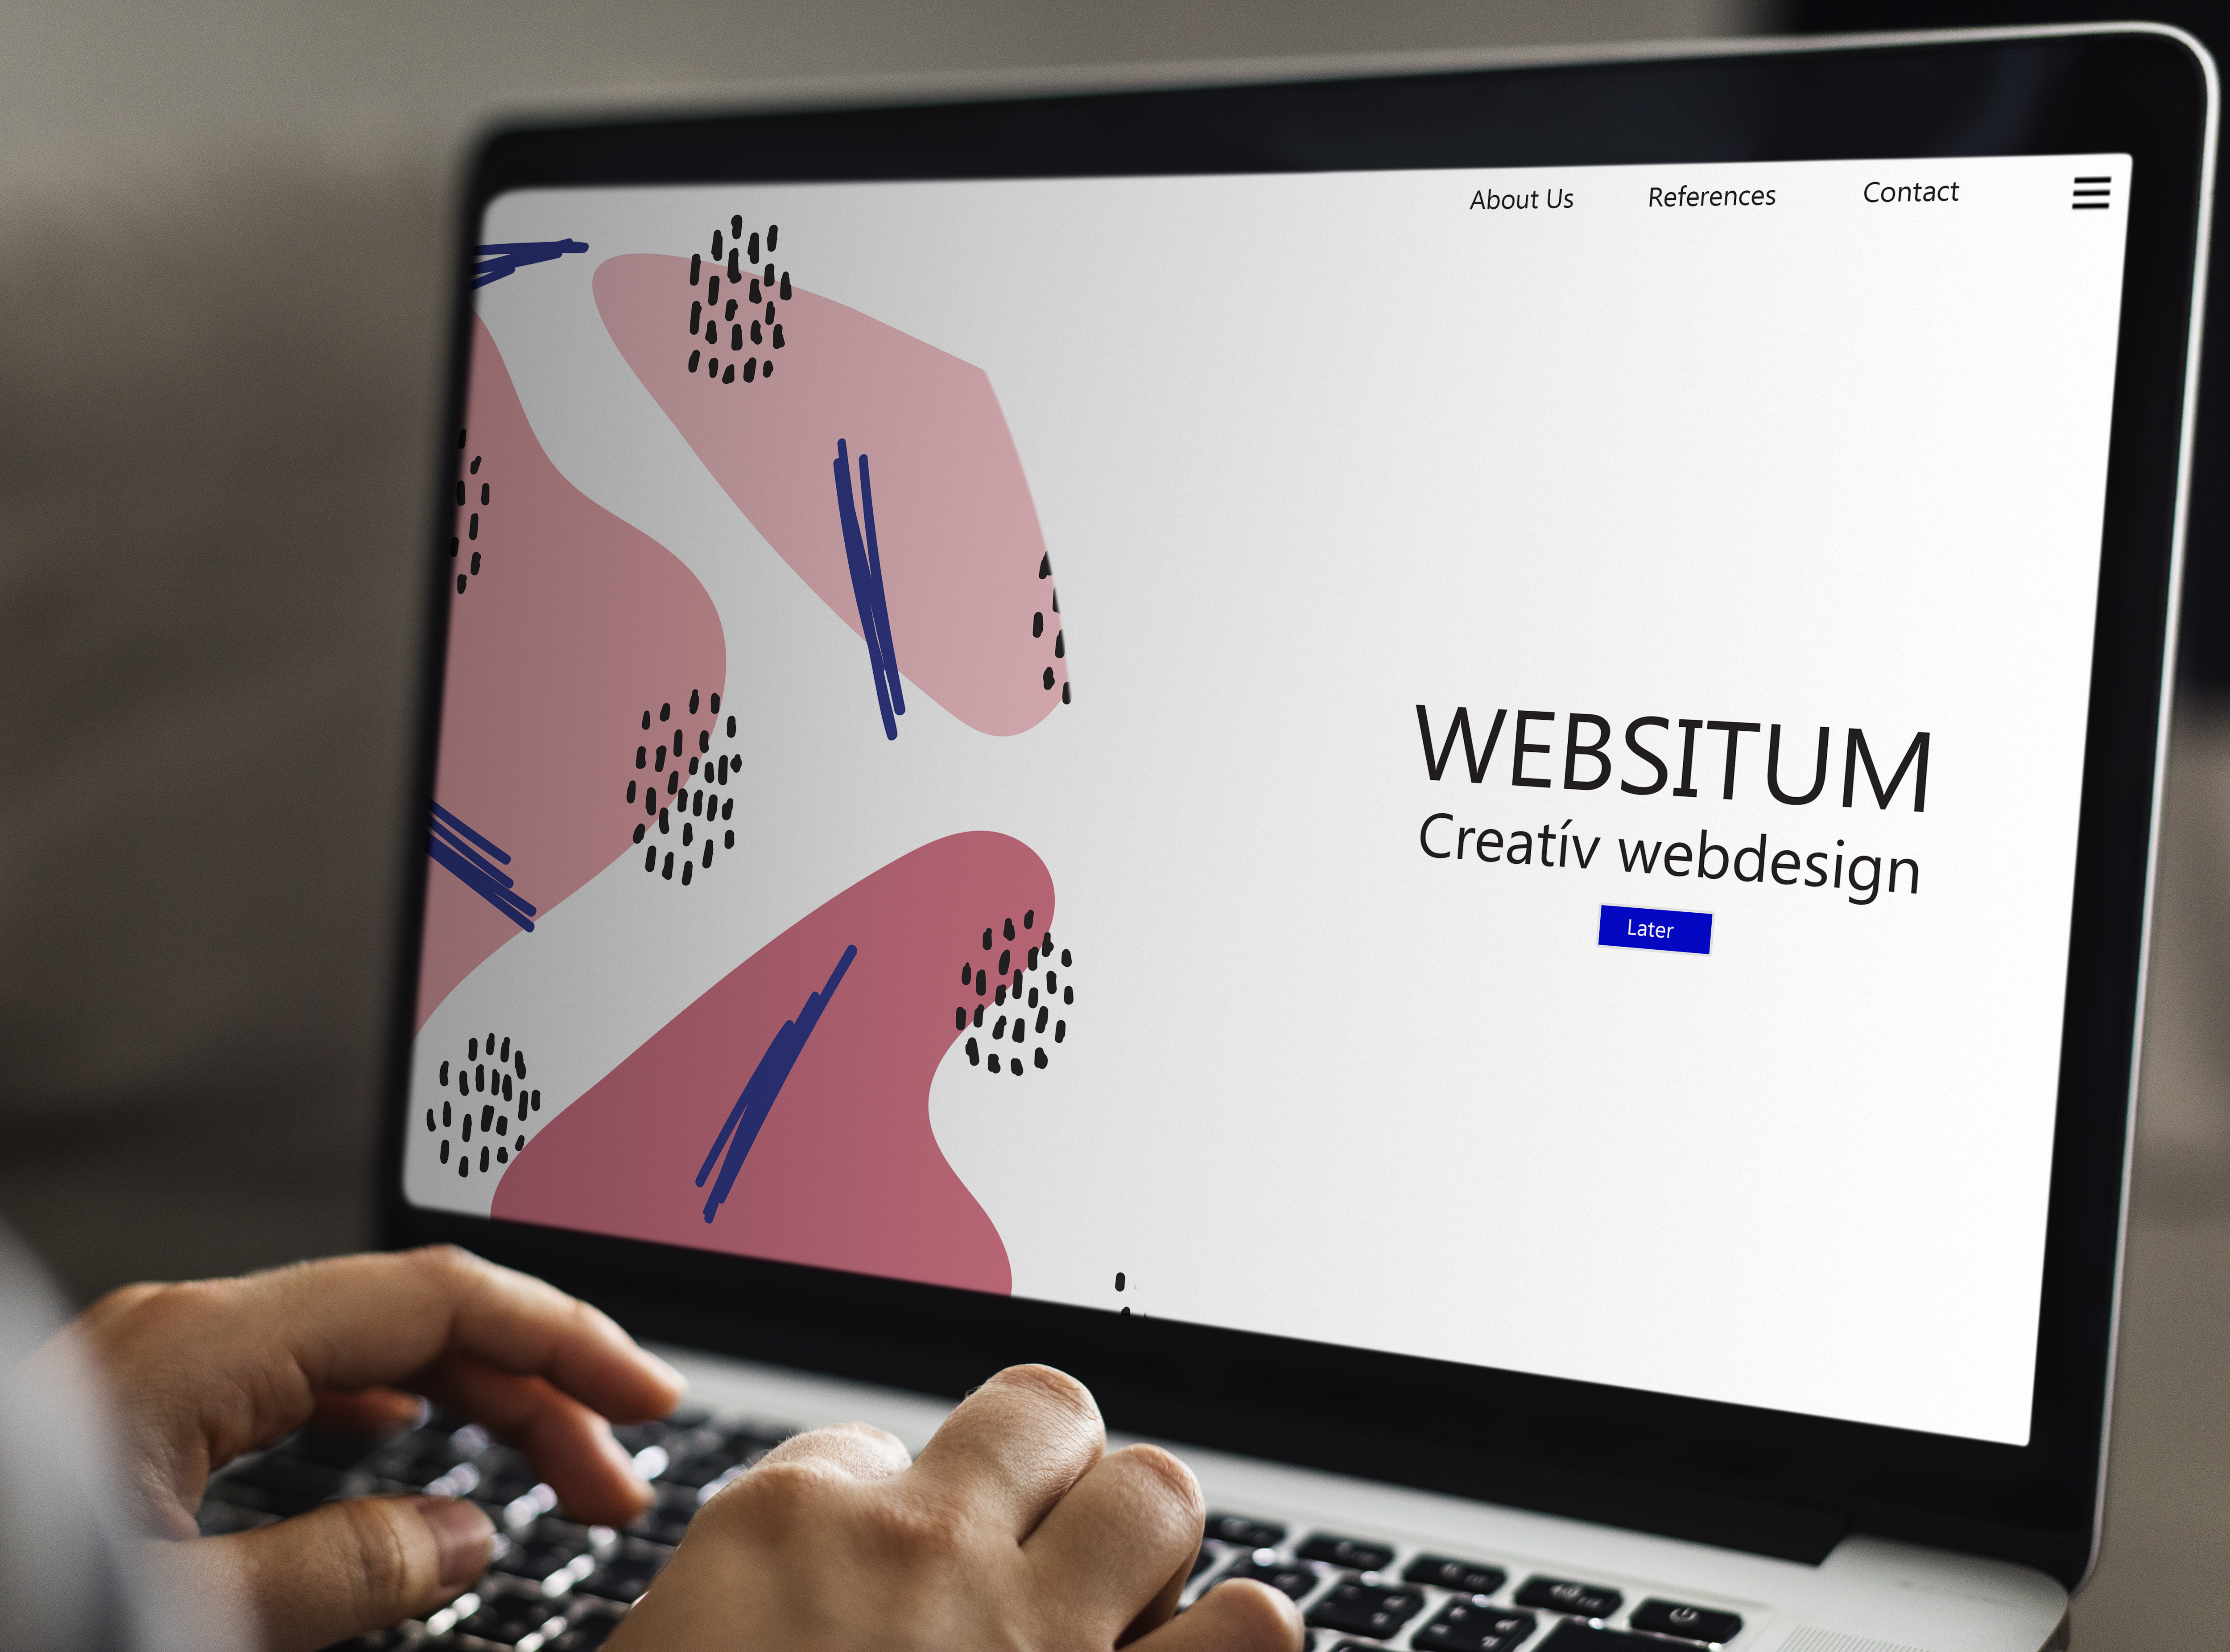 Websitum - Creative webdesign